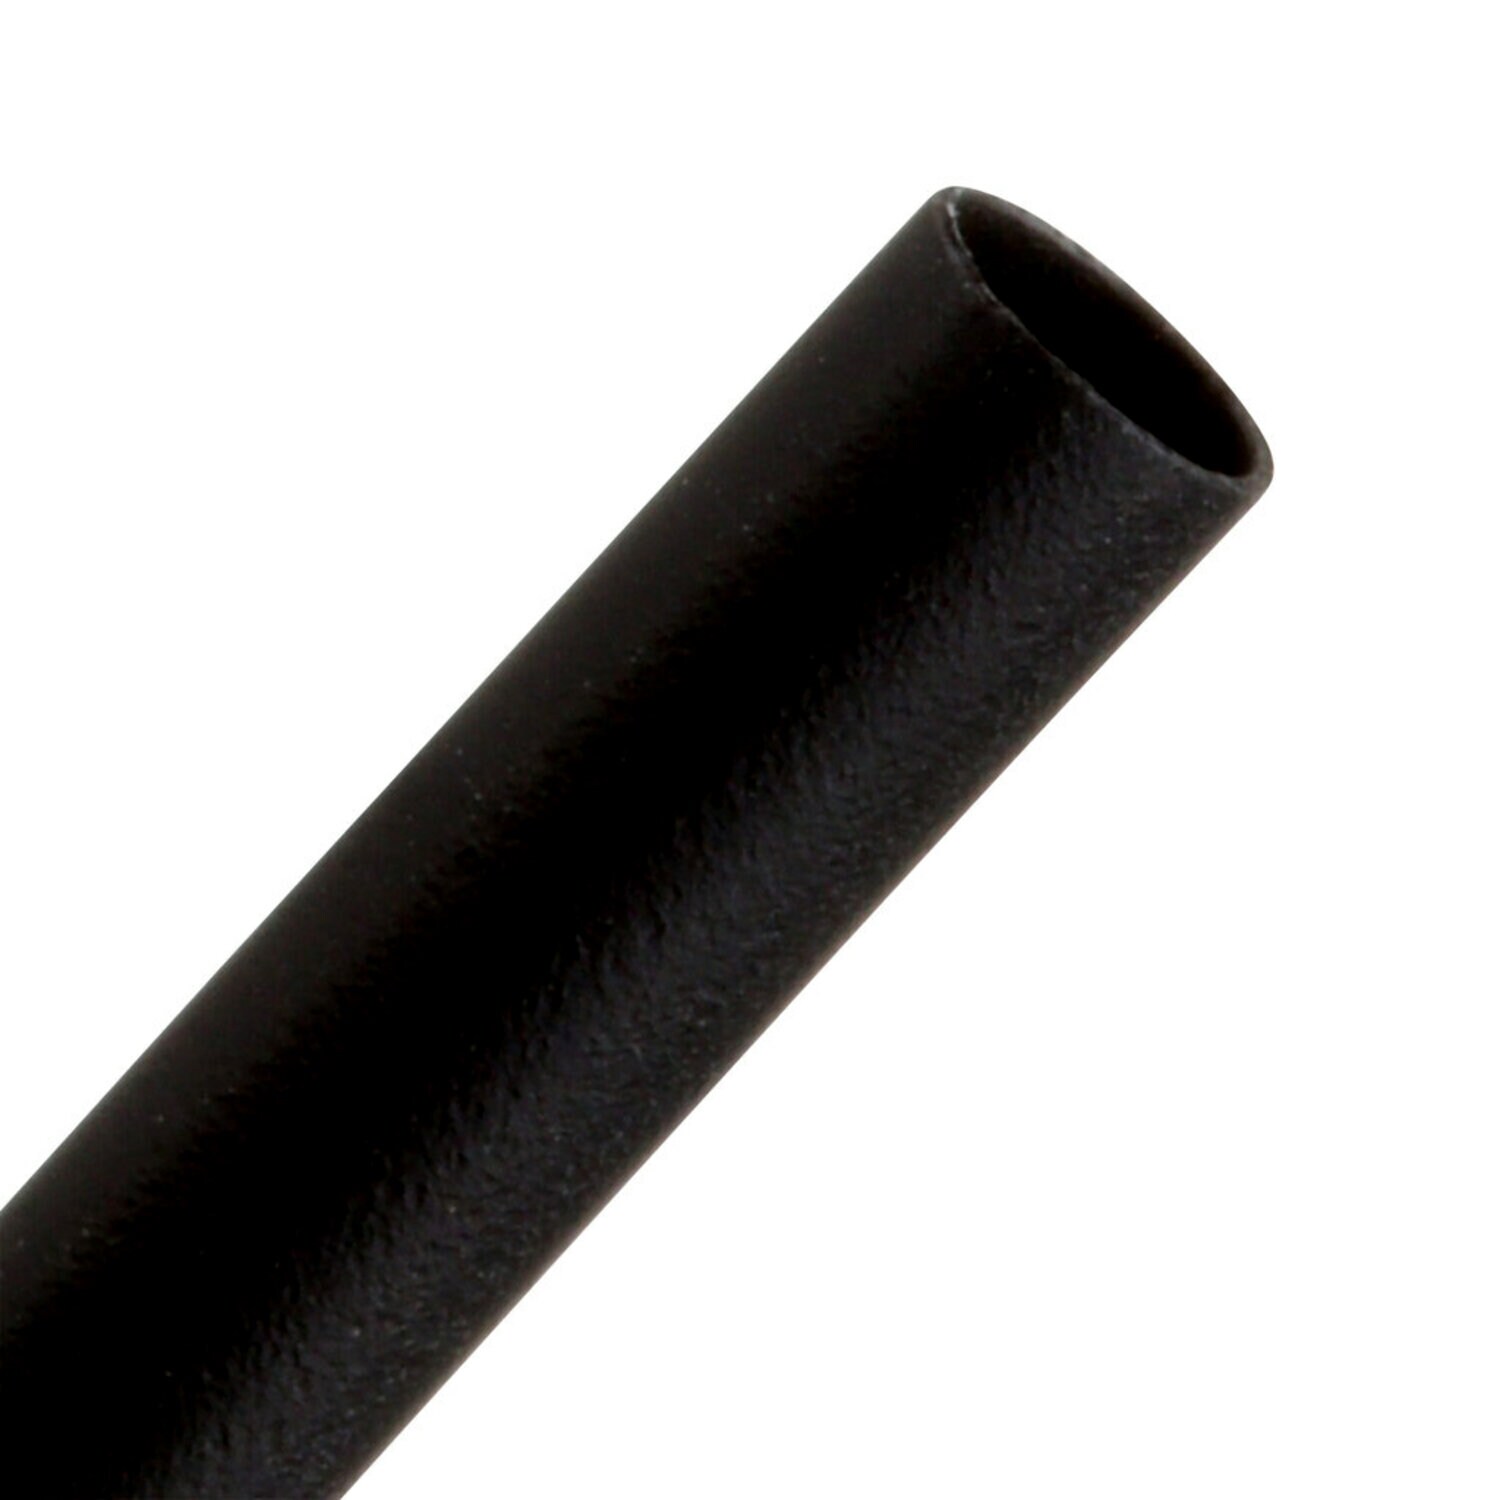 7100029984 - 3M Heat Shrink Thin-Wall Tubing FP-301-1/8-Black-100': 100 ft spool
length, 300 linear ft/box, 3 Rolls/Case